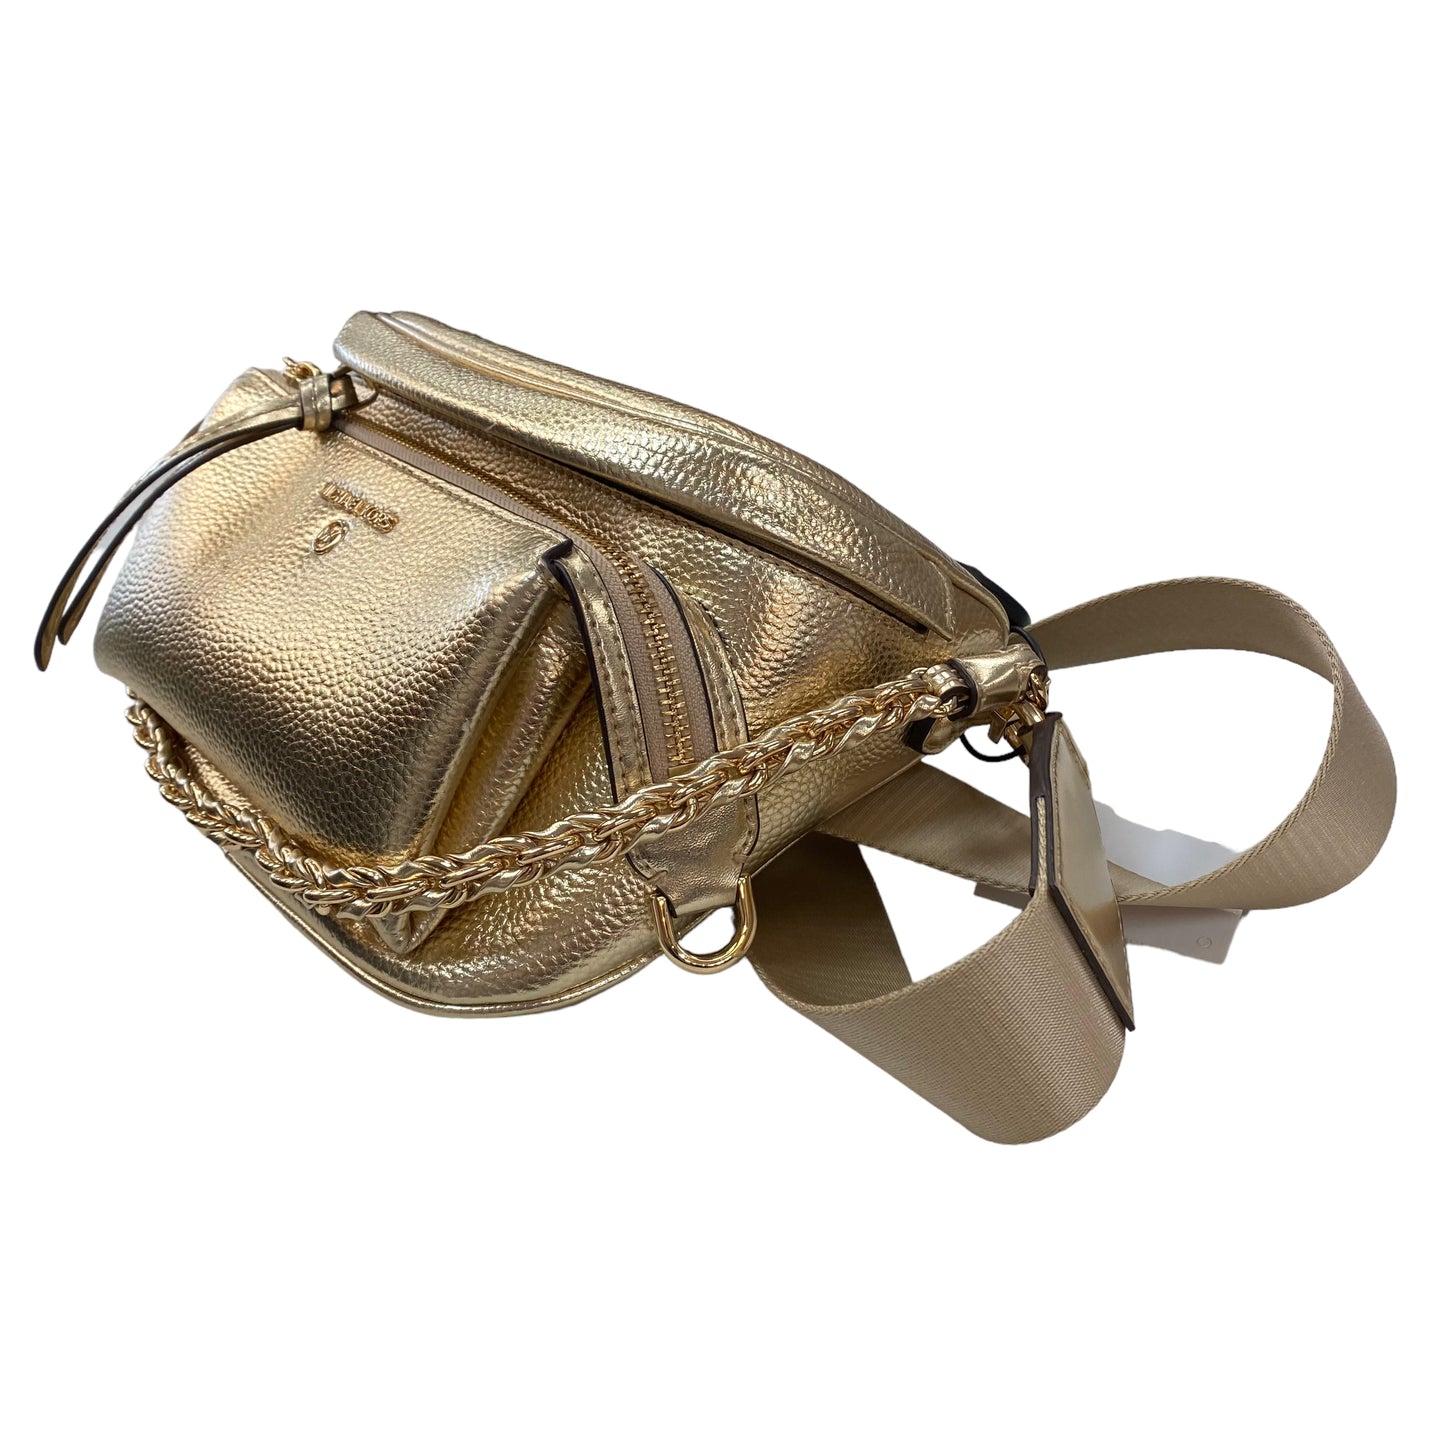 Gold Handbag Designer Michael Kors, Size Medium